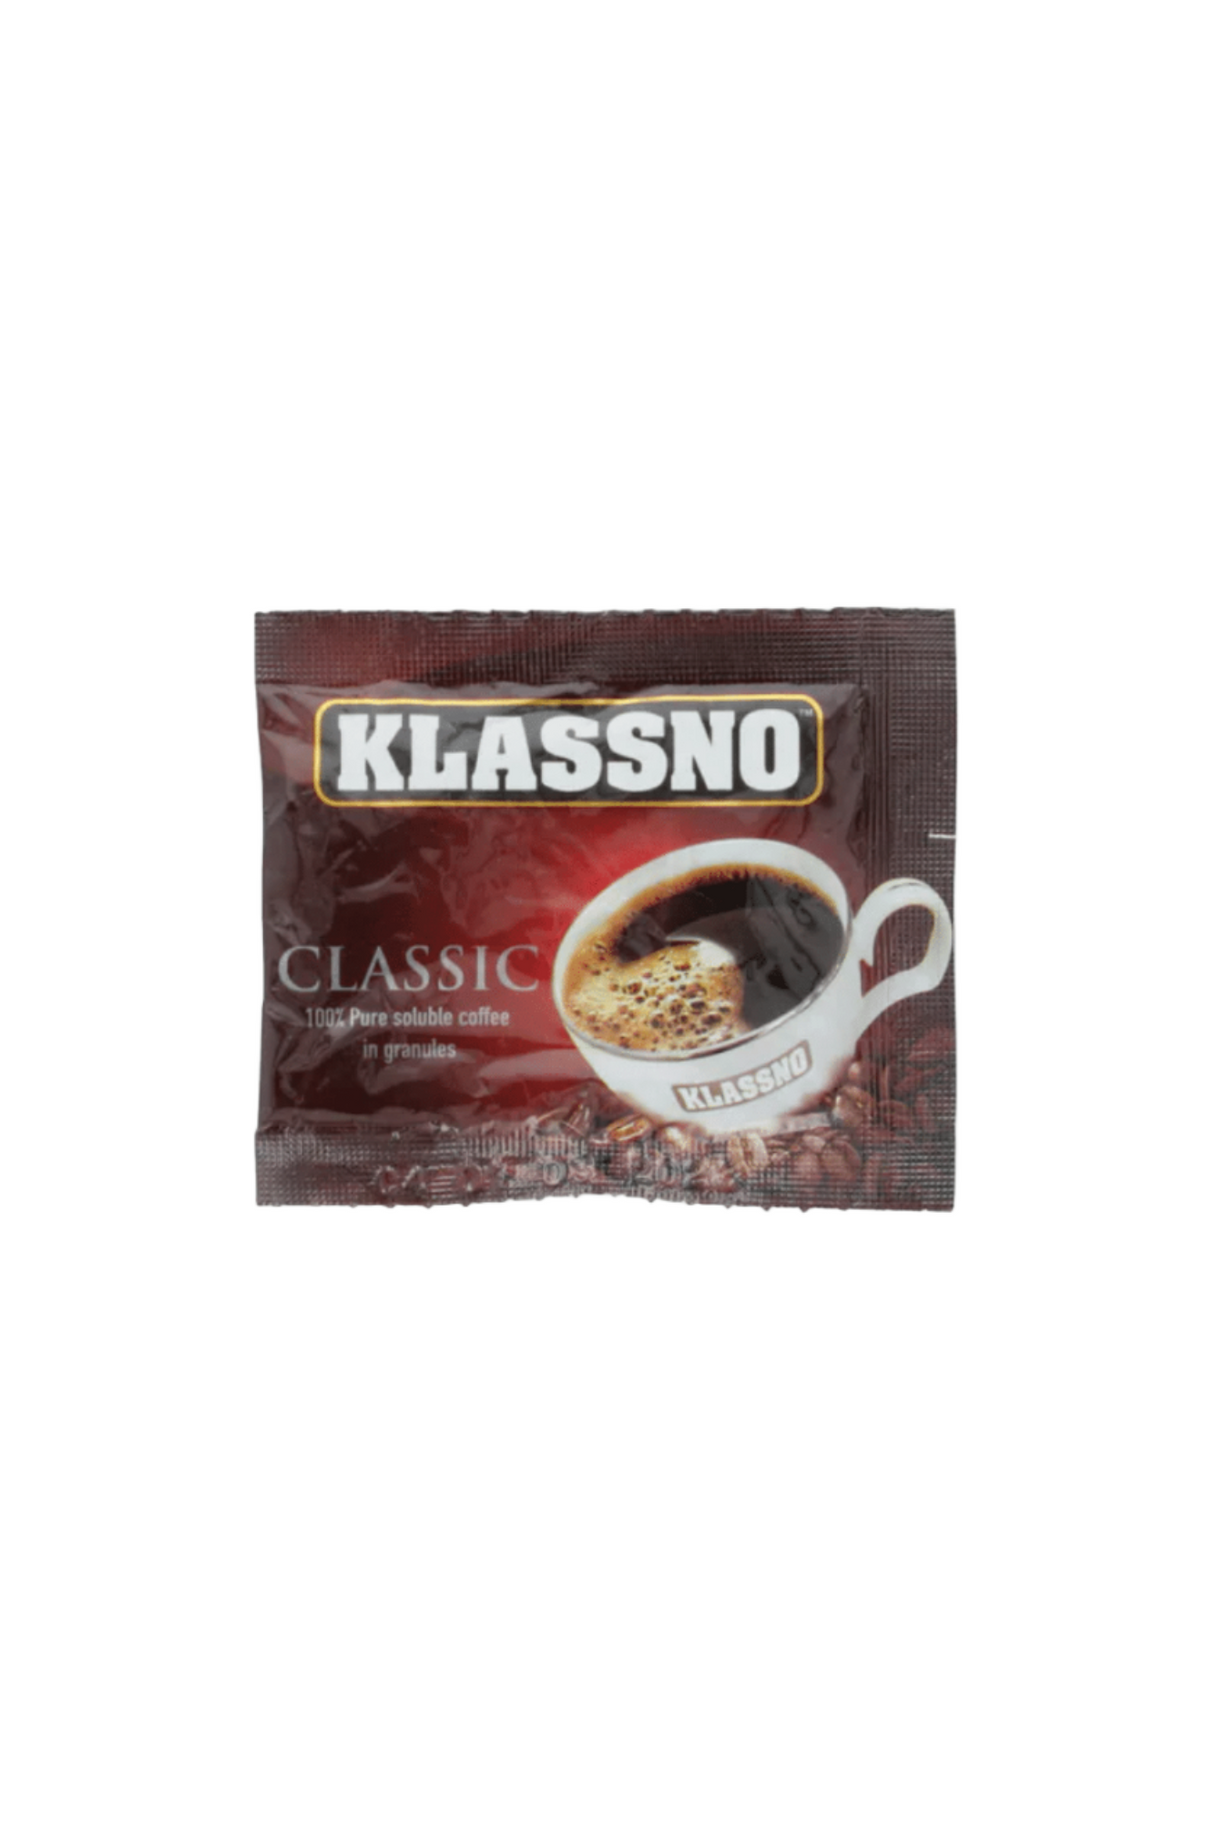 klassno coffee classic 2g